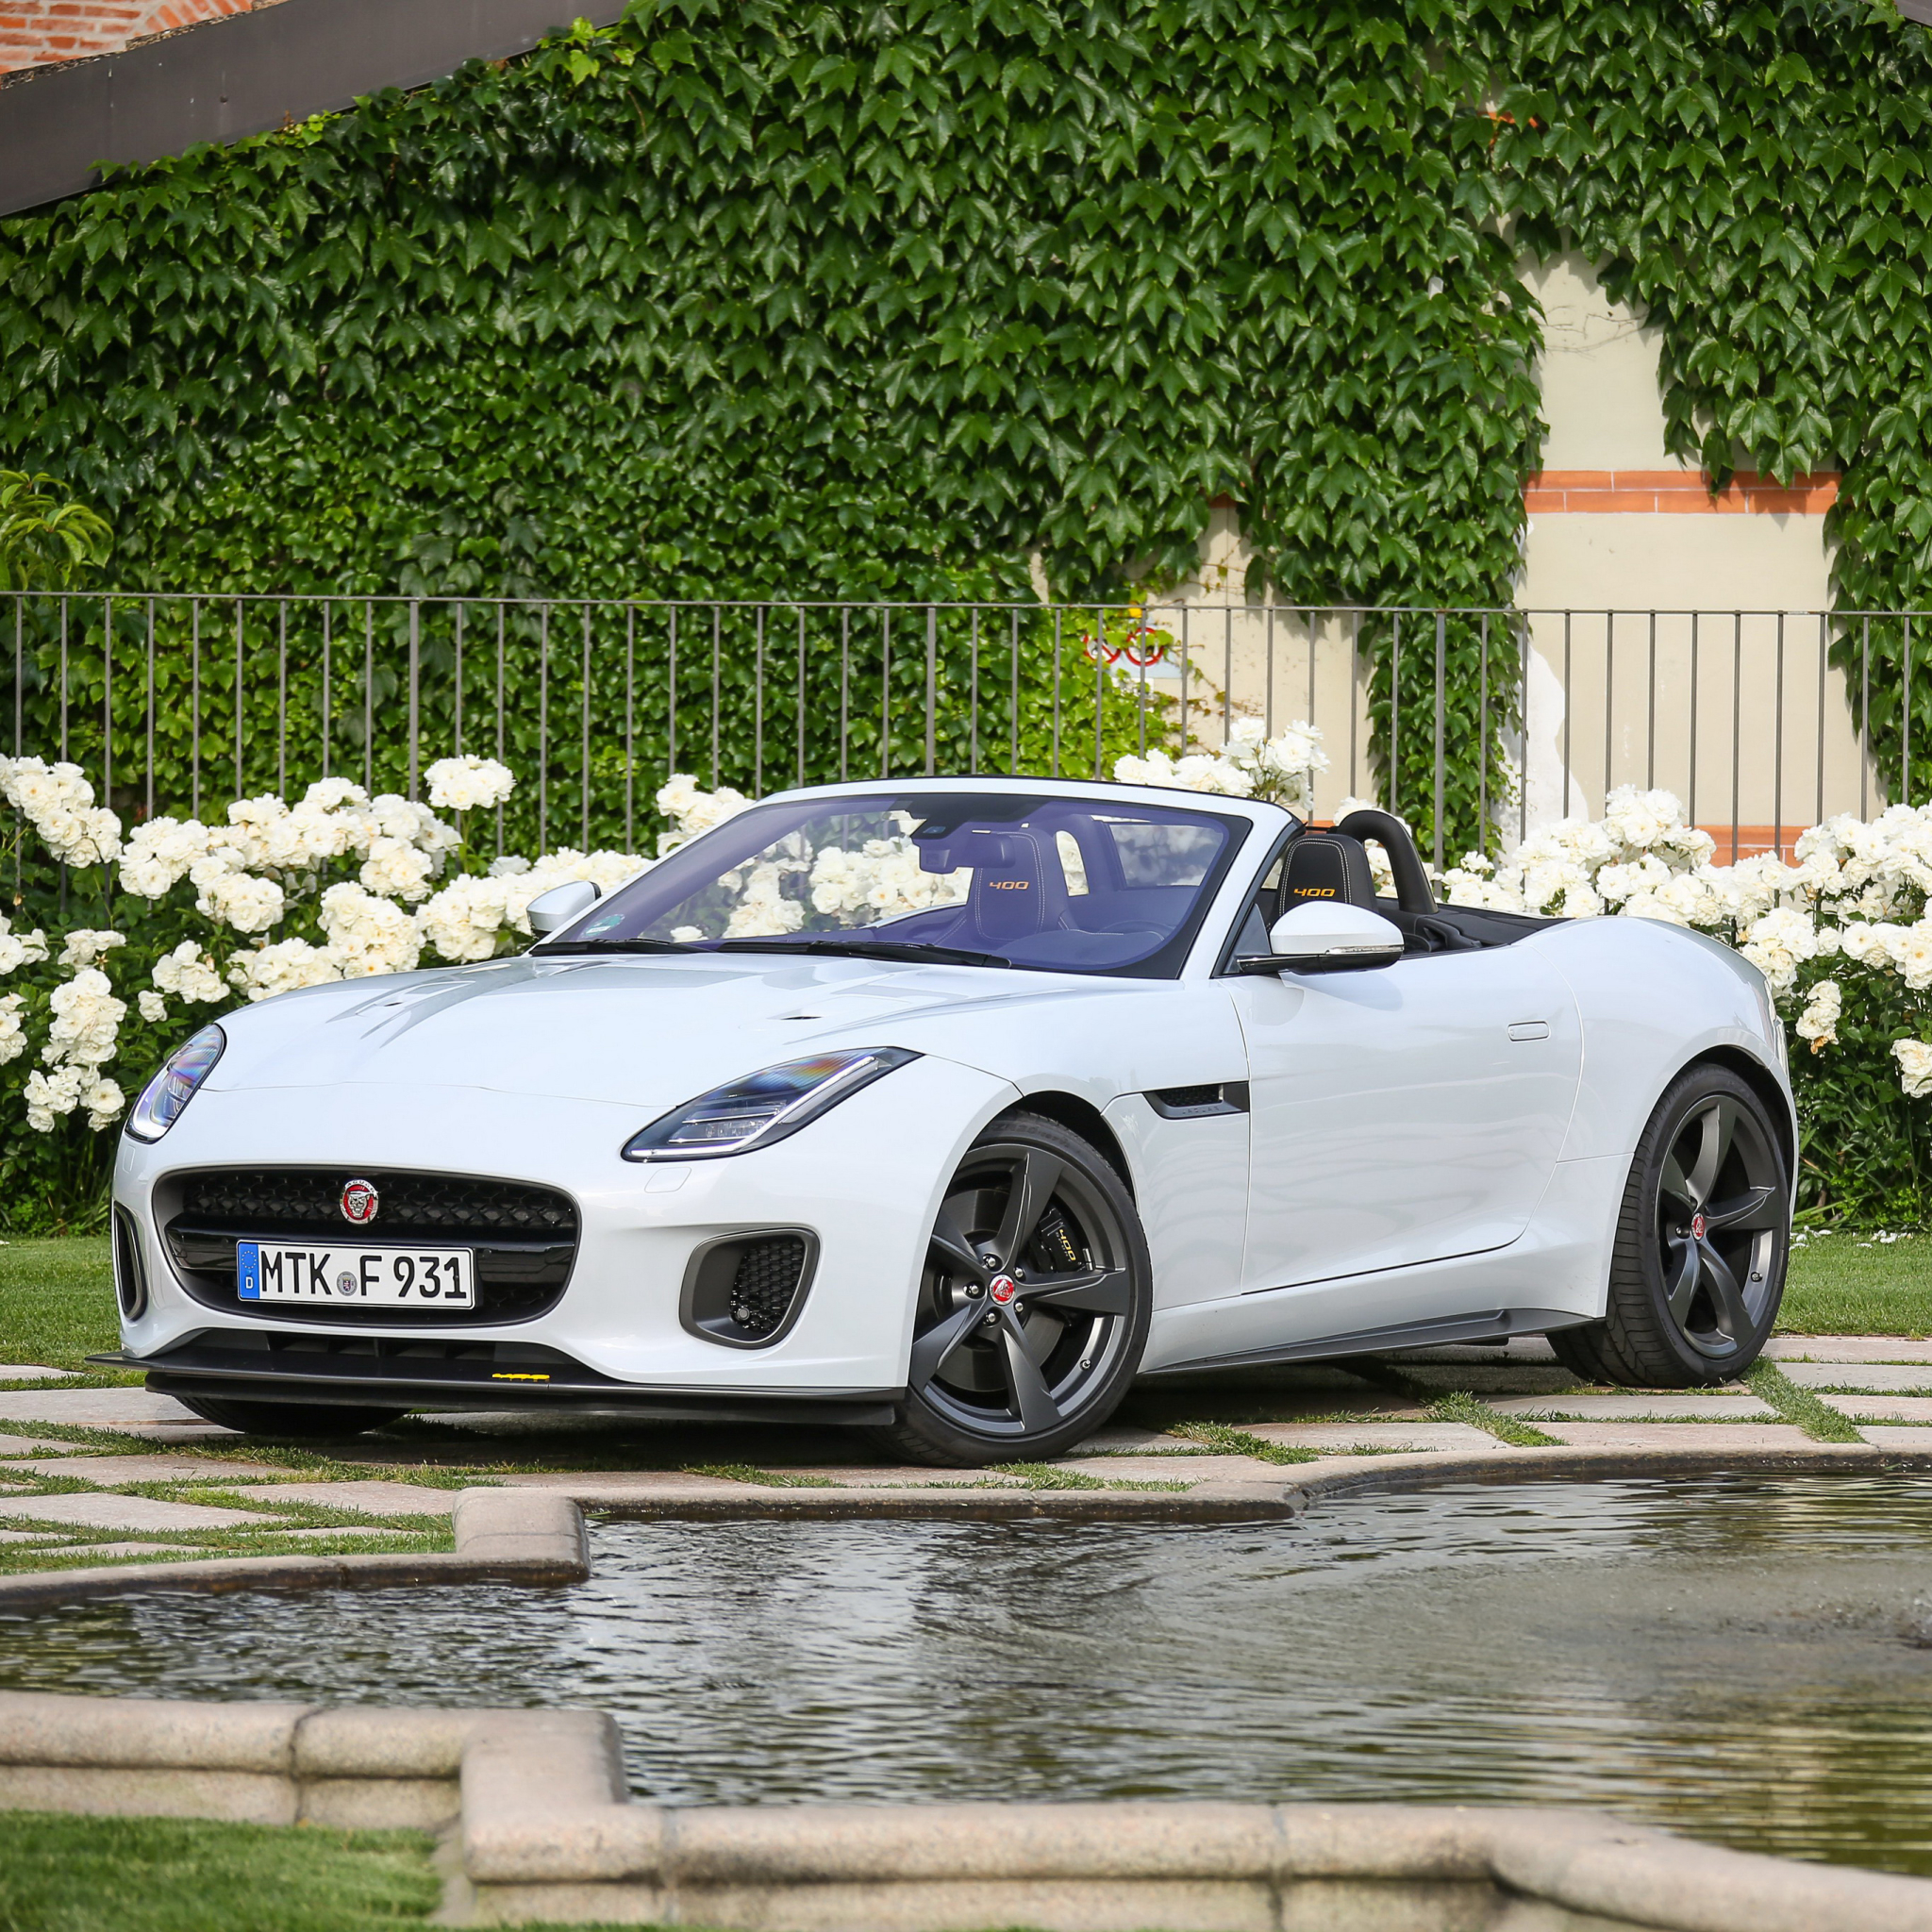 Jaguar F-Type next to a Fountain